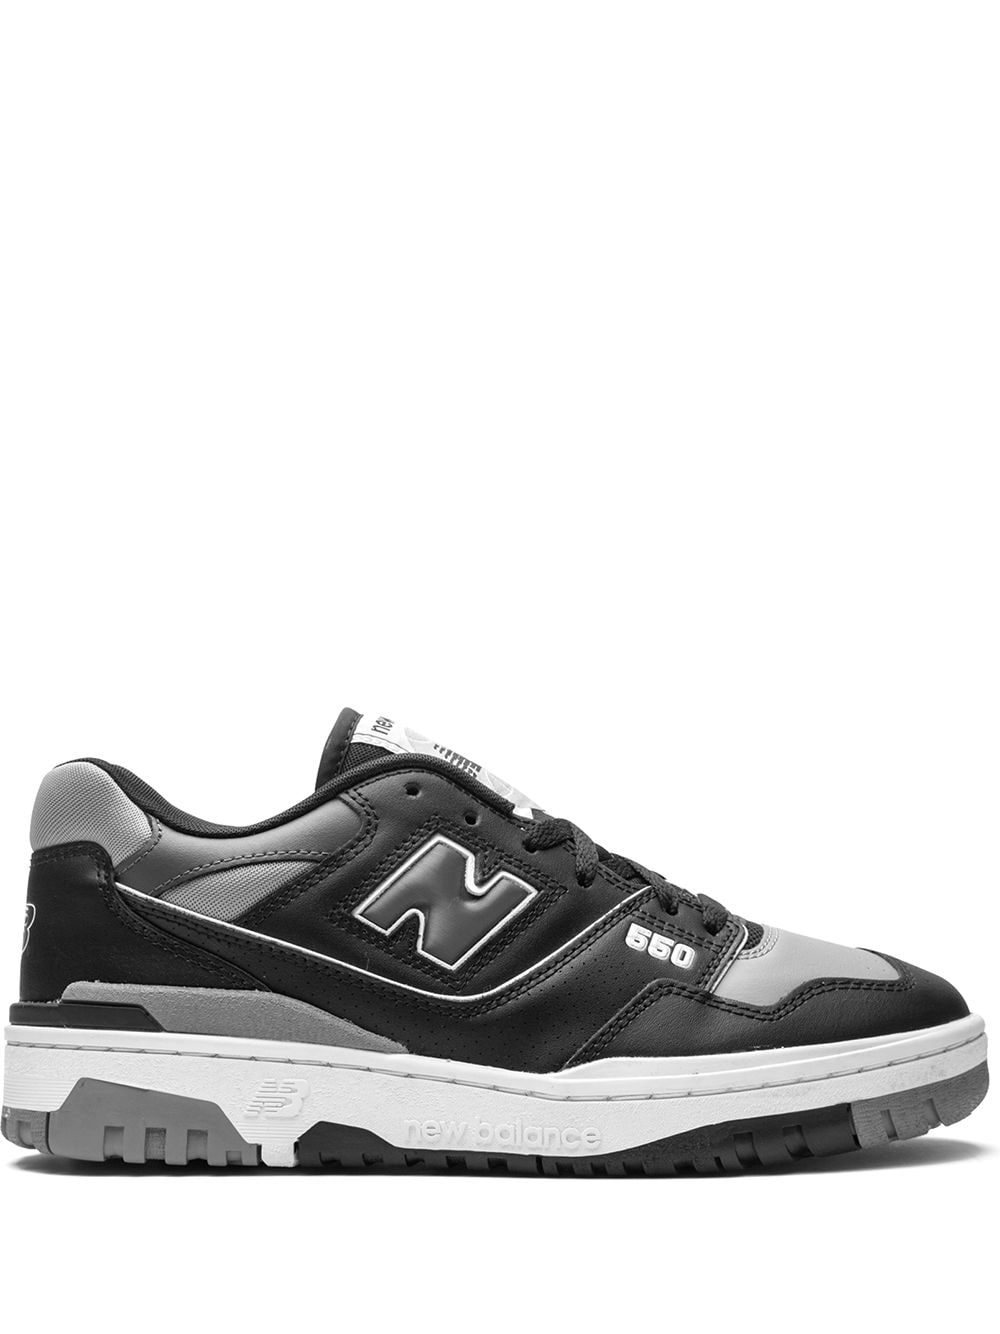 New Balance 550 "Black" sneakers